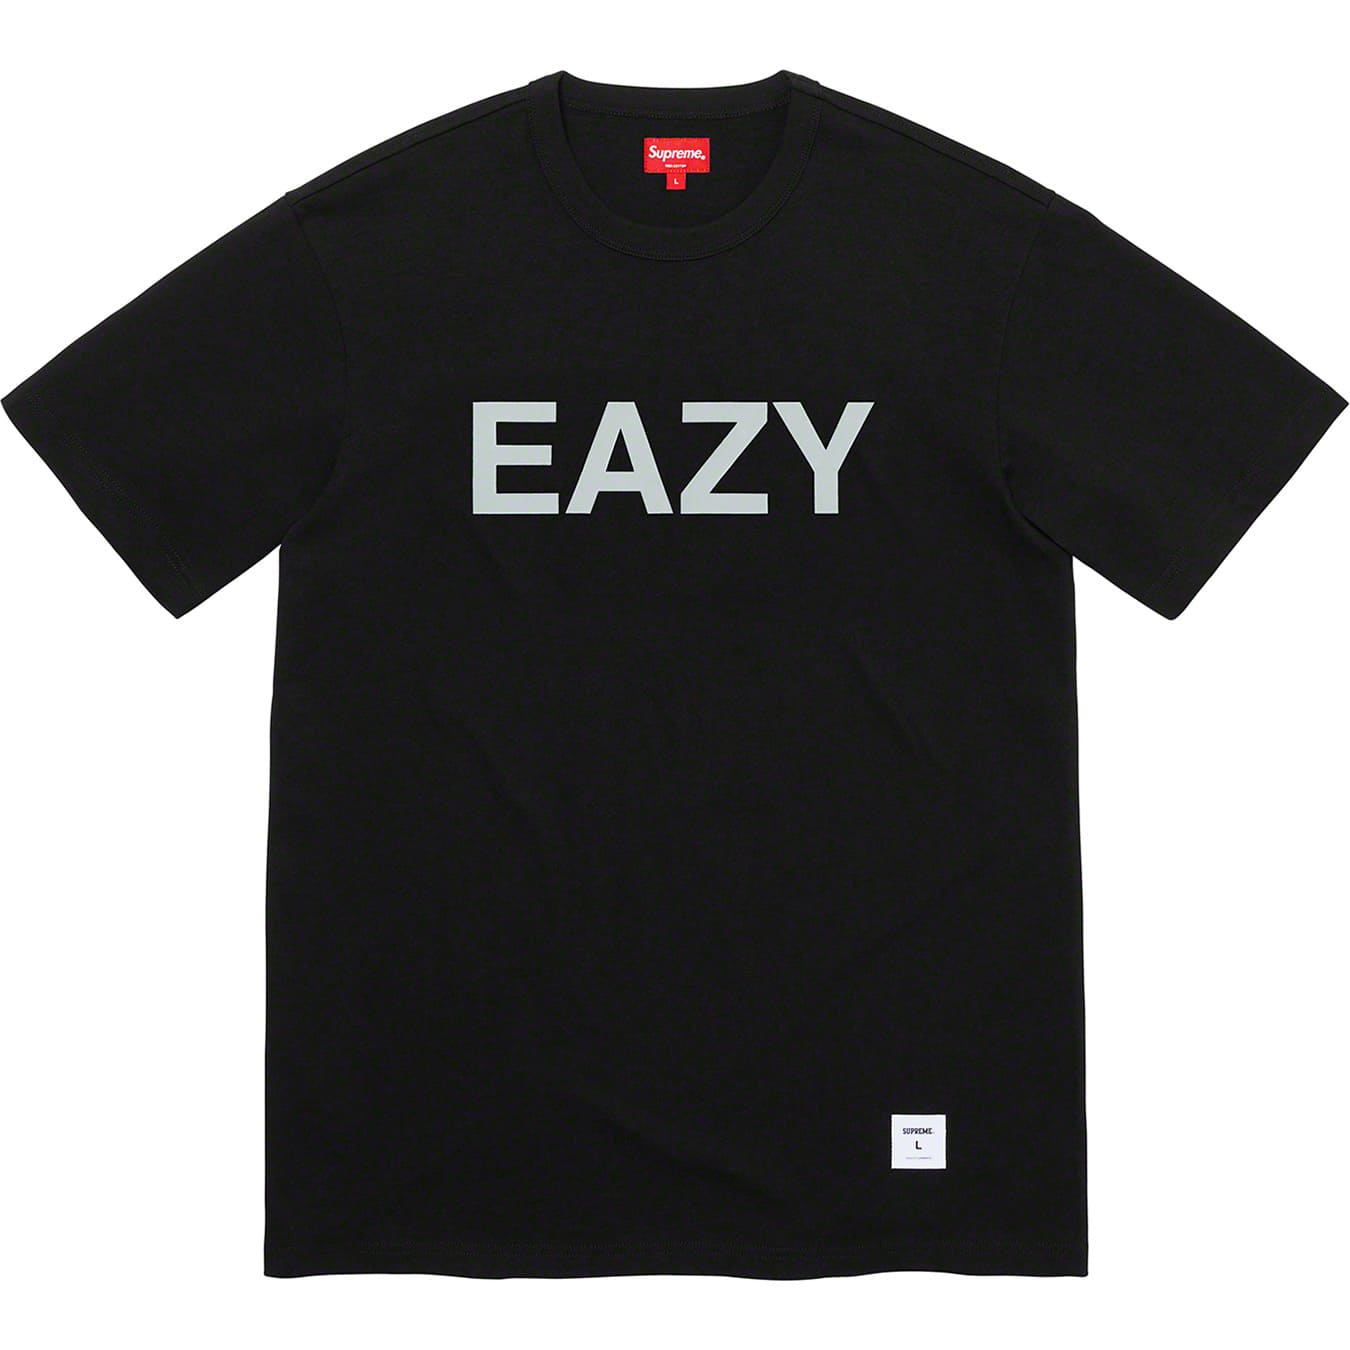 Supreme Eazy S/S Top